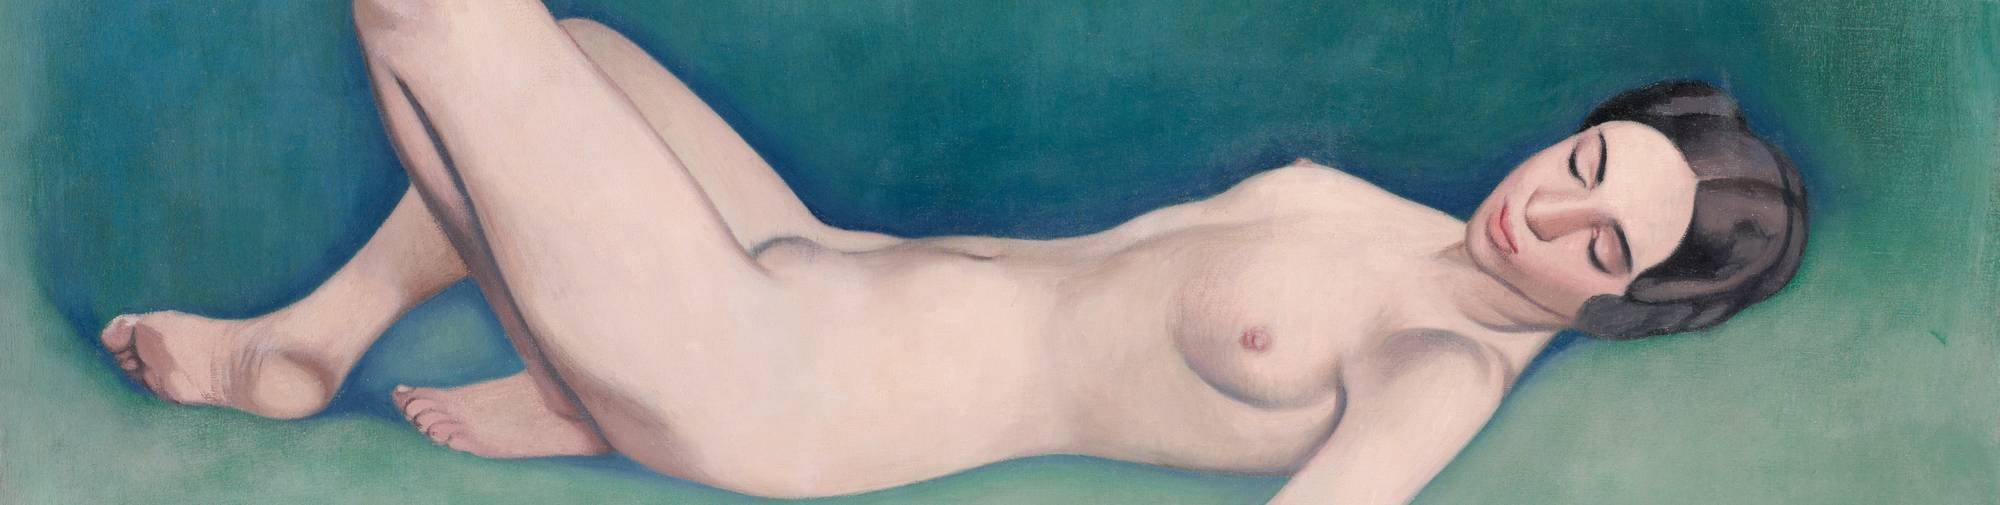 Félix Vallotton Femme nue couchée dormant, 1913 Öl auf Leinwand 96 x 130 cm Dauerleihgabe an die Hahnloser/Jaeggli Stiftung Villa Flora, Winterthur